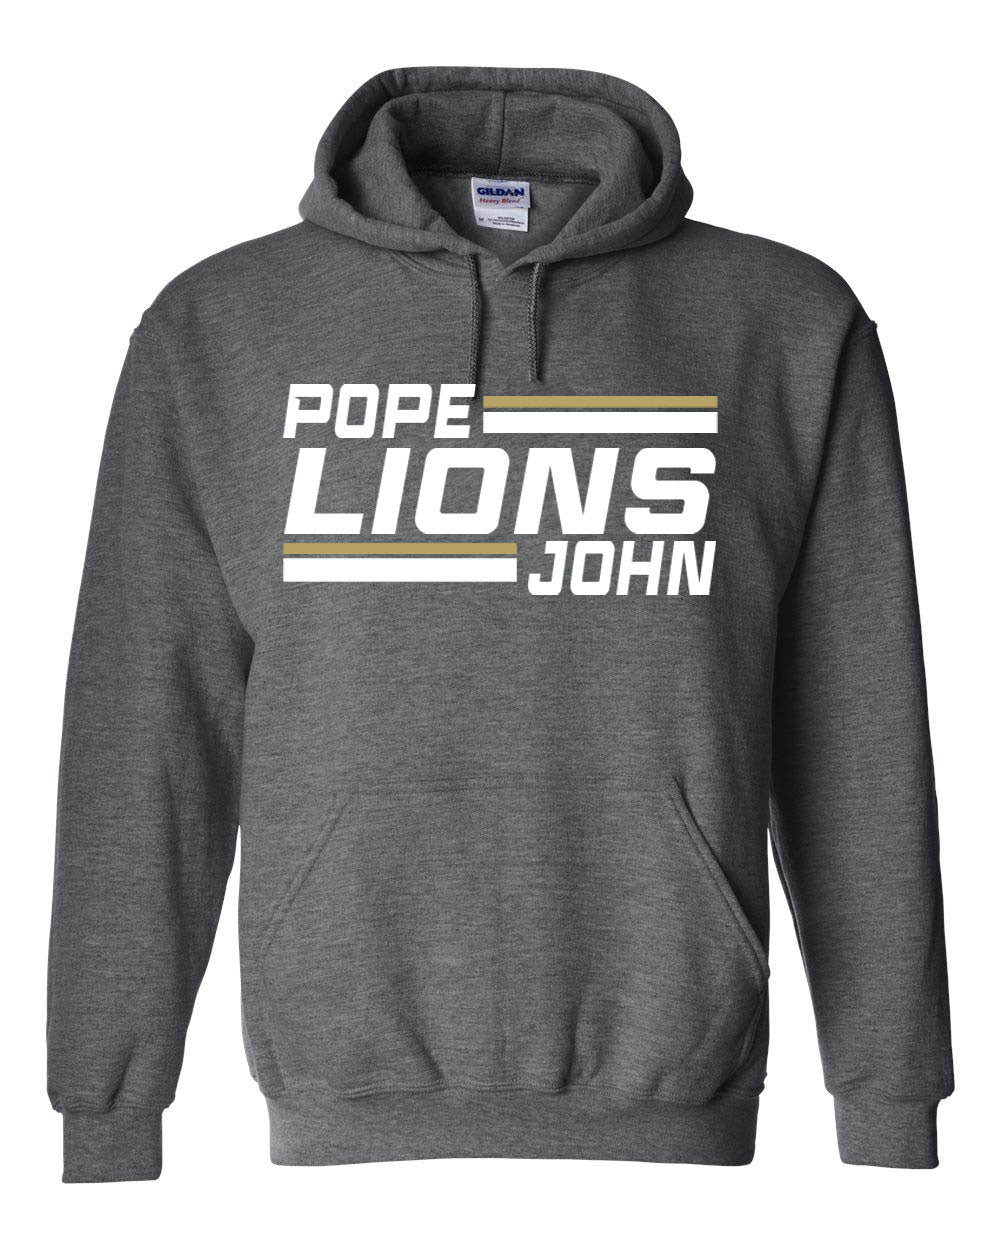 Pope John Cheer Design 5 Hooded Sweatshirt